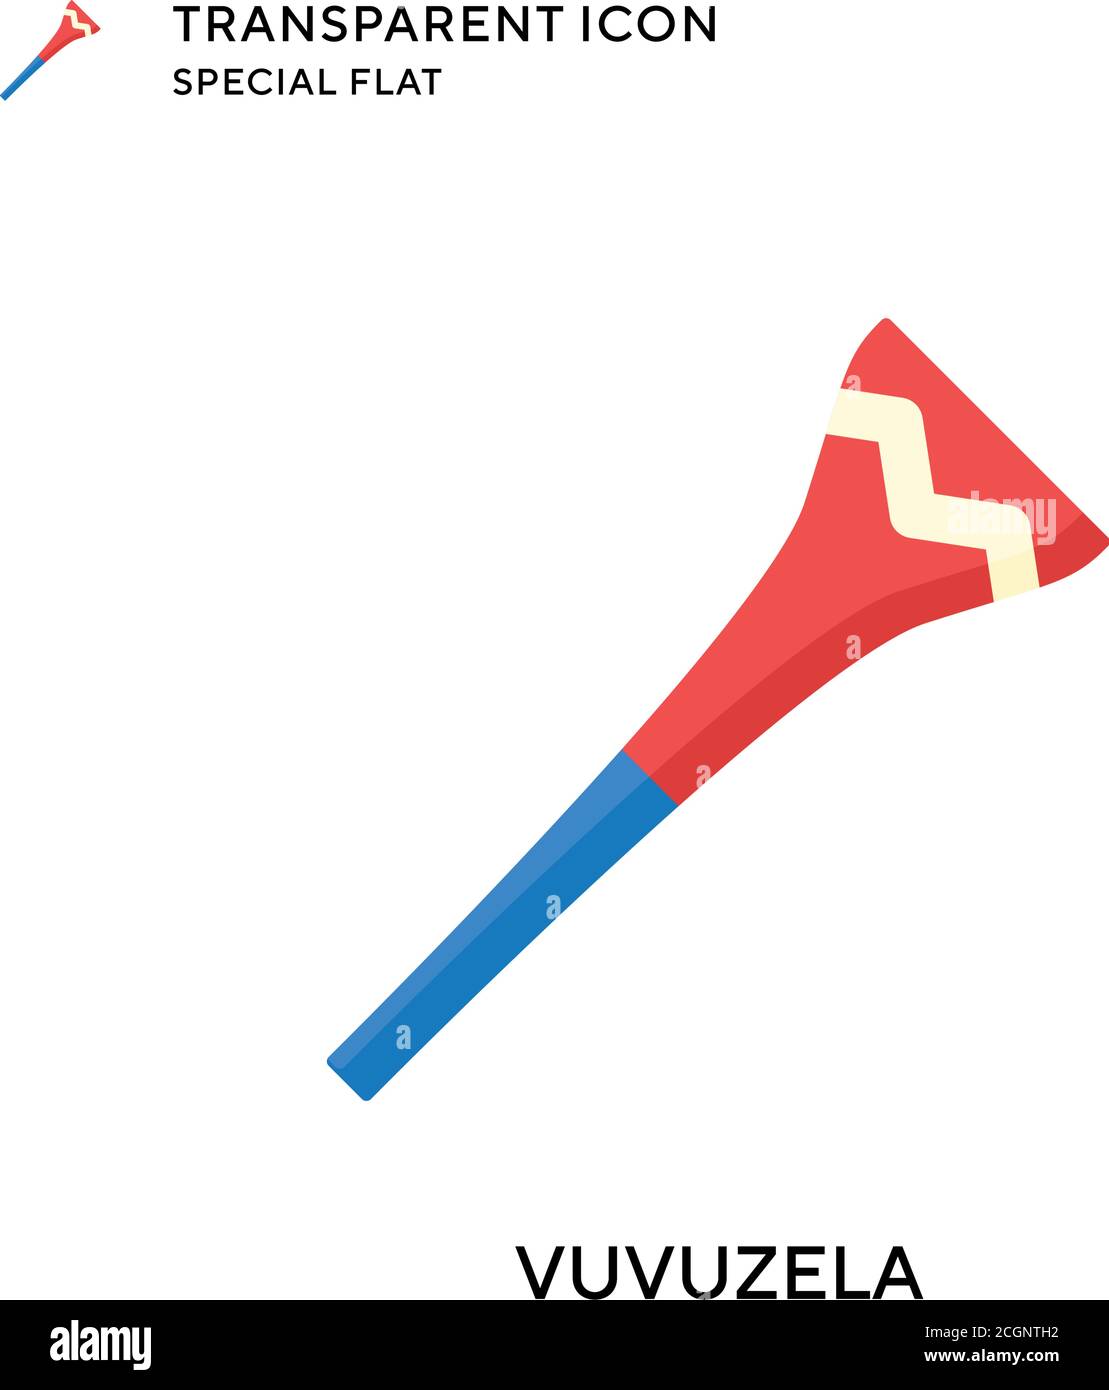 Vuvuzela vector icon. Flat style illustration. EPS 10 vector. Stock Vector